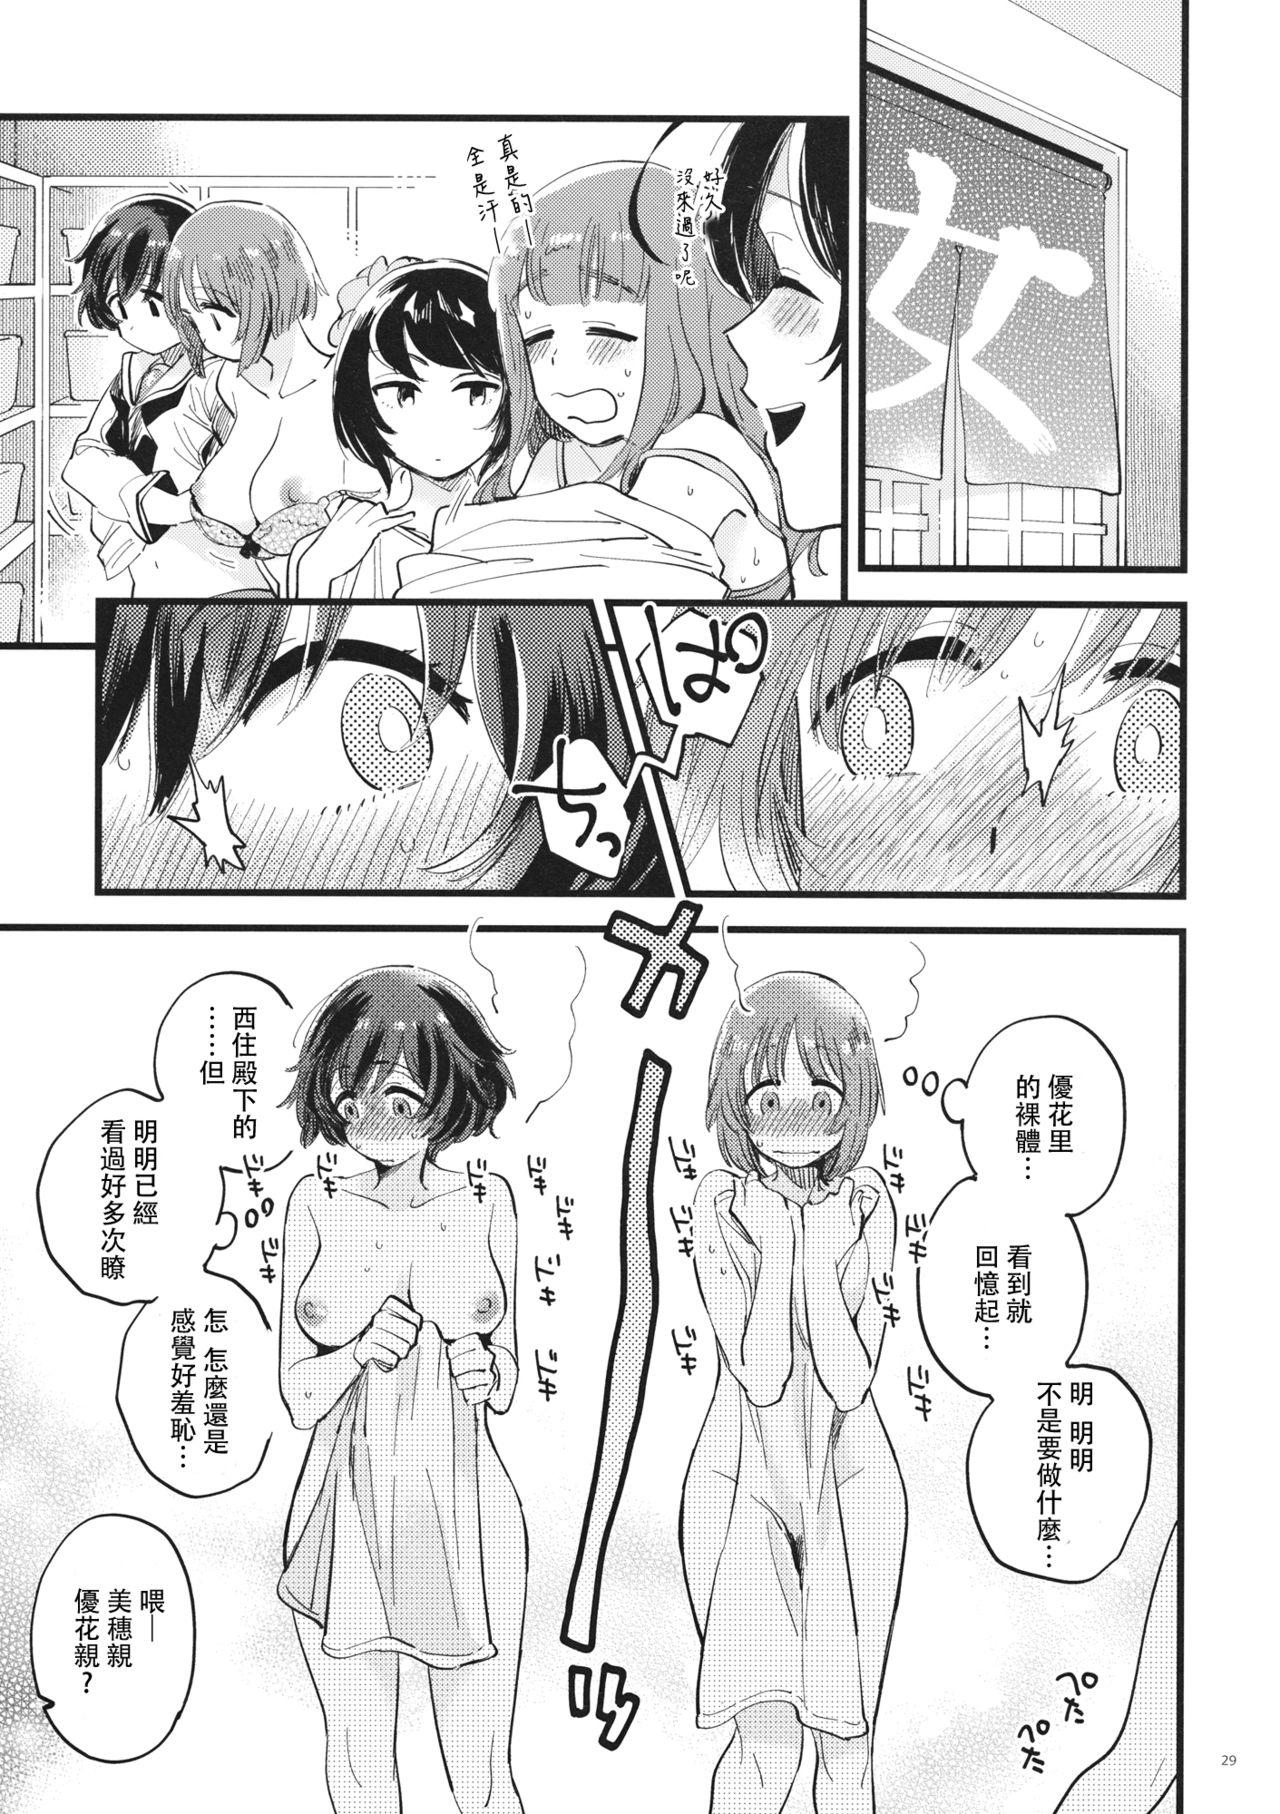 Shaking Yasashiku, Sawatte, Oku made Furete. - Girls und panzer Sweet - Page 29